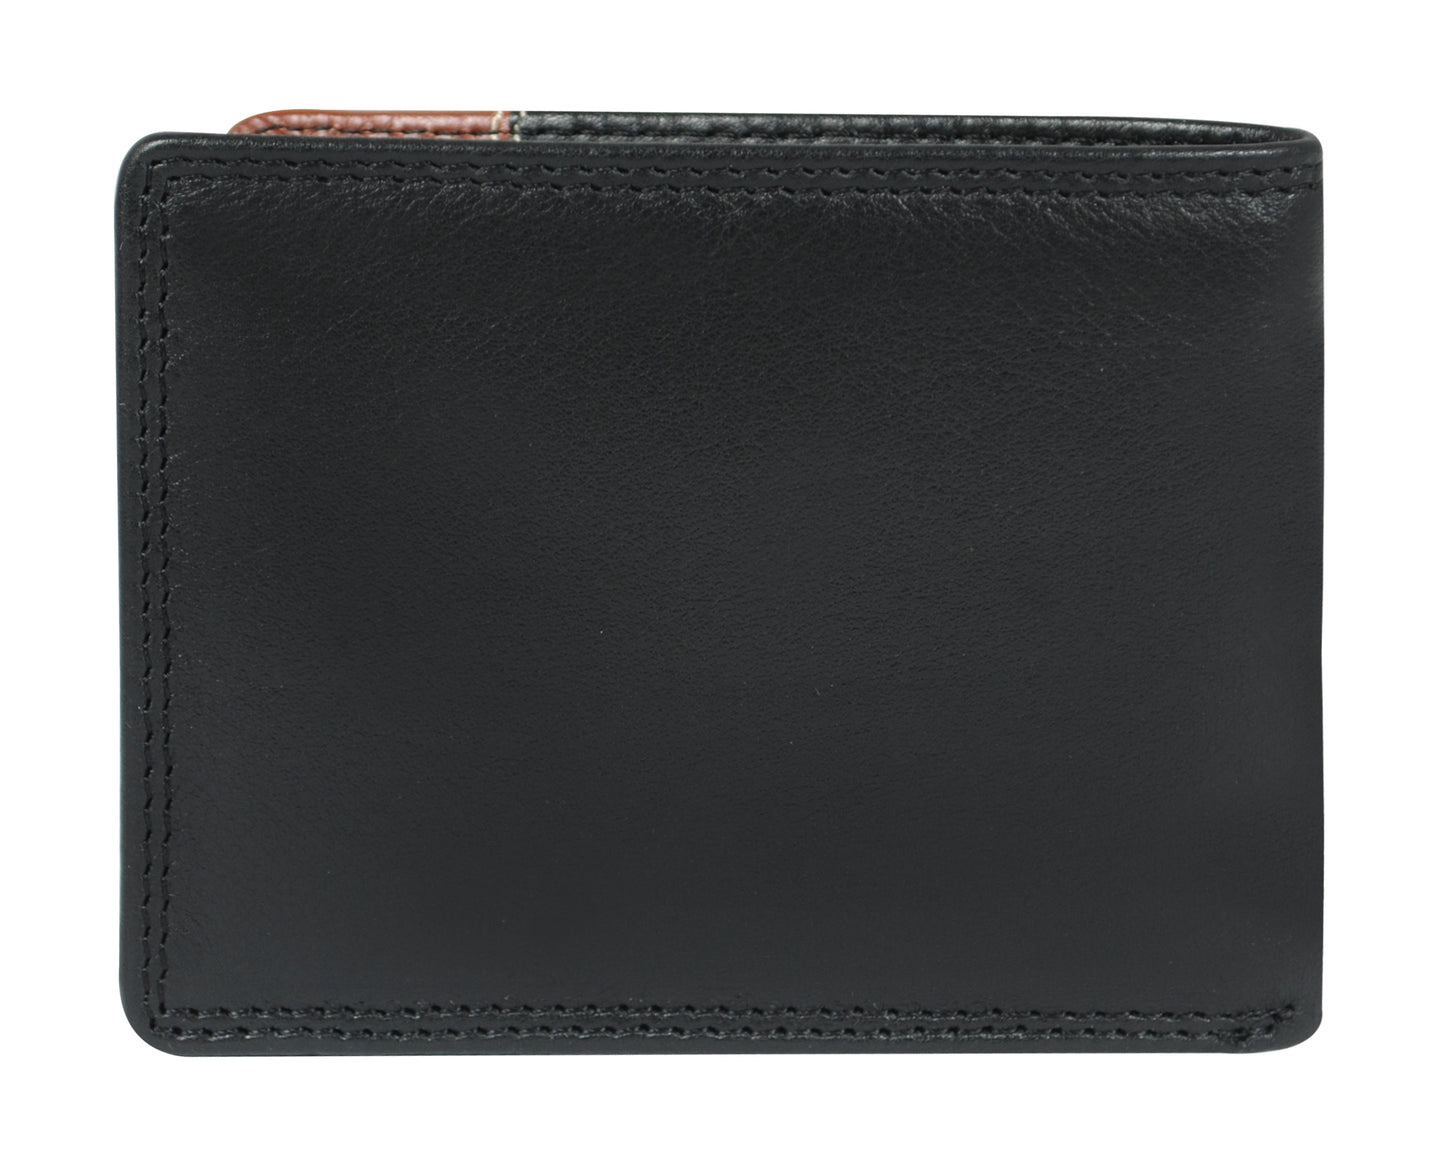 Calfnero Men's Genuine Leather Wallet (1224-Black-Brown)